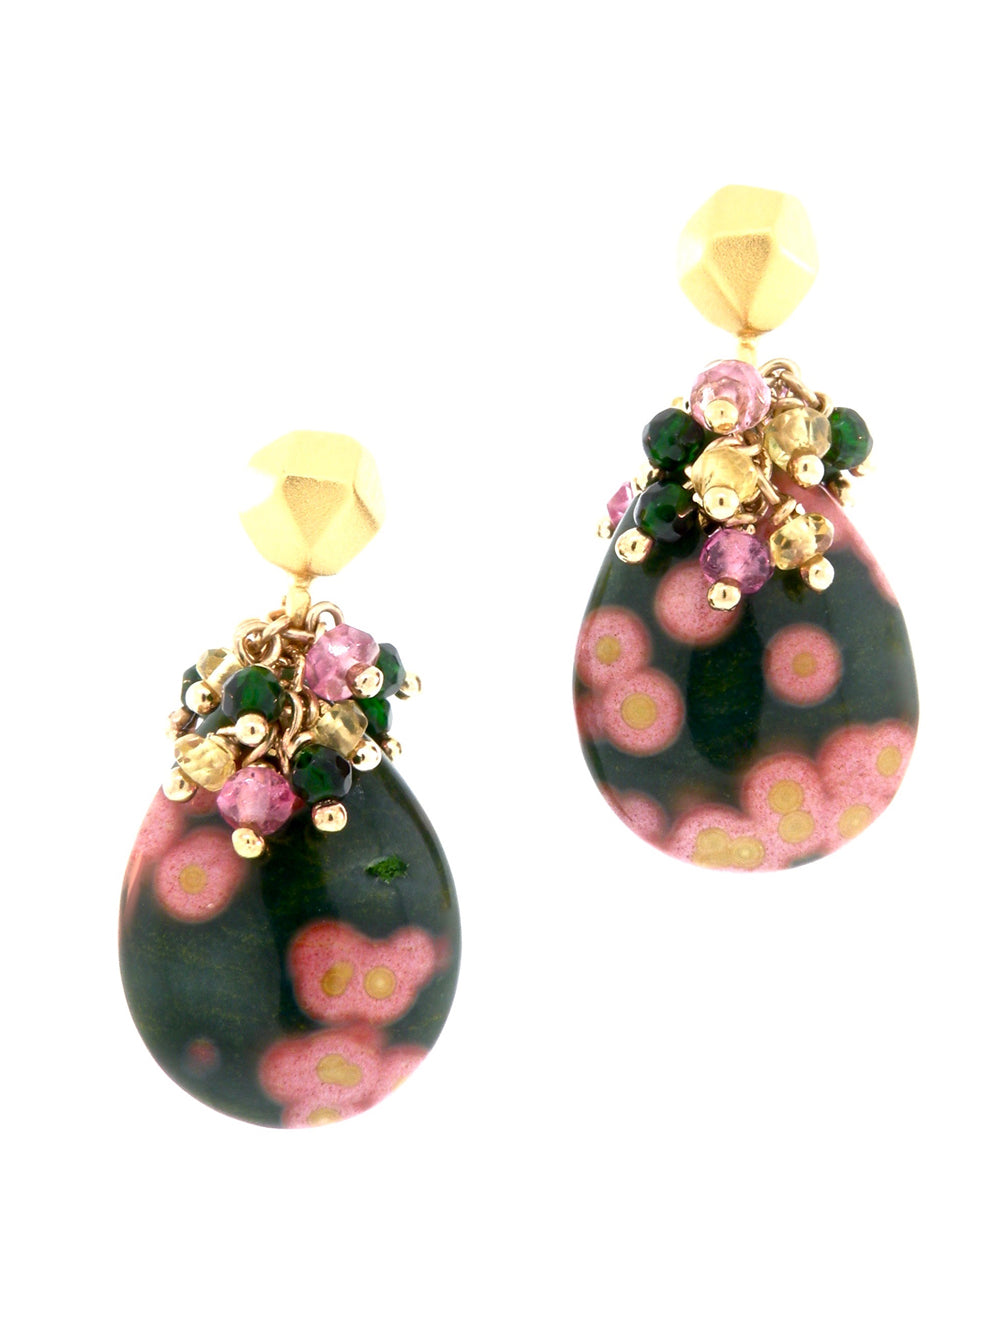 Blossoming Plumeria Earrings - Dana Busch Designs 